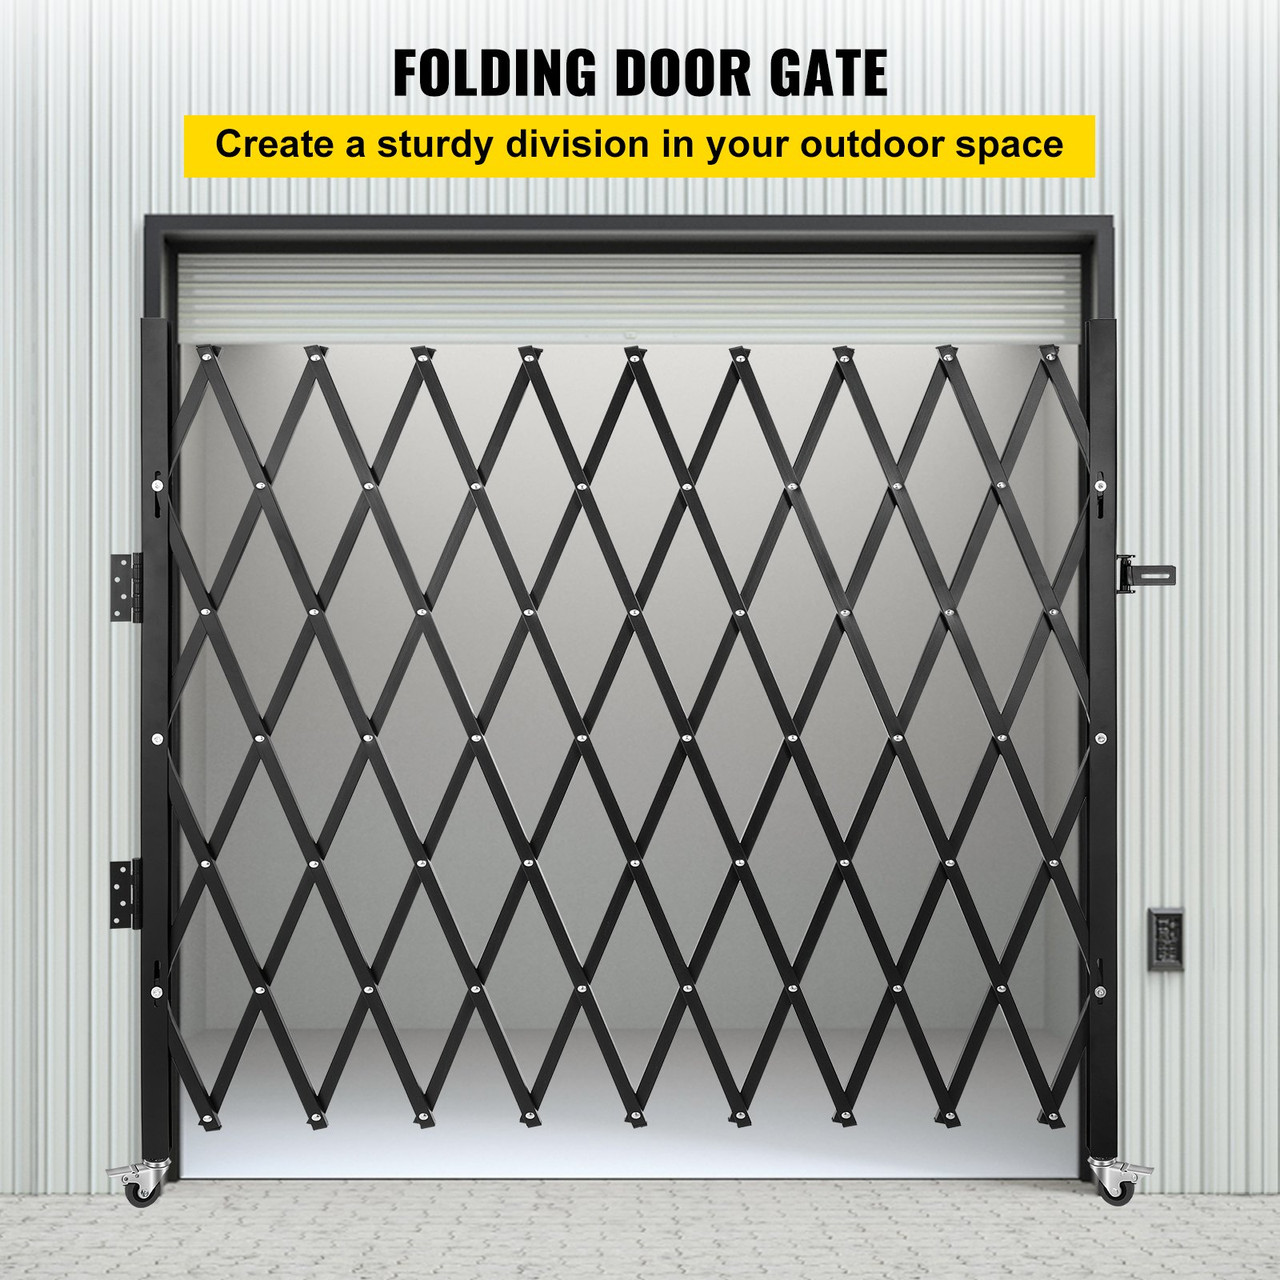 VEVOR Single Folding Security Gate, 7.1' H x 7.1' W ?85 x 85 inch?Folding Door Gate, Steel Accordion Security Gate, Flexible Expanding Security Gate, 360° Rolling Barricade Gate, Scissor Gate/Door with Padlock